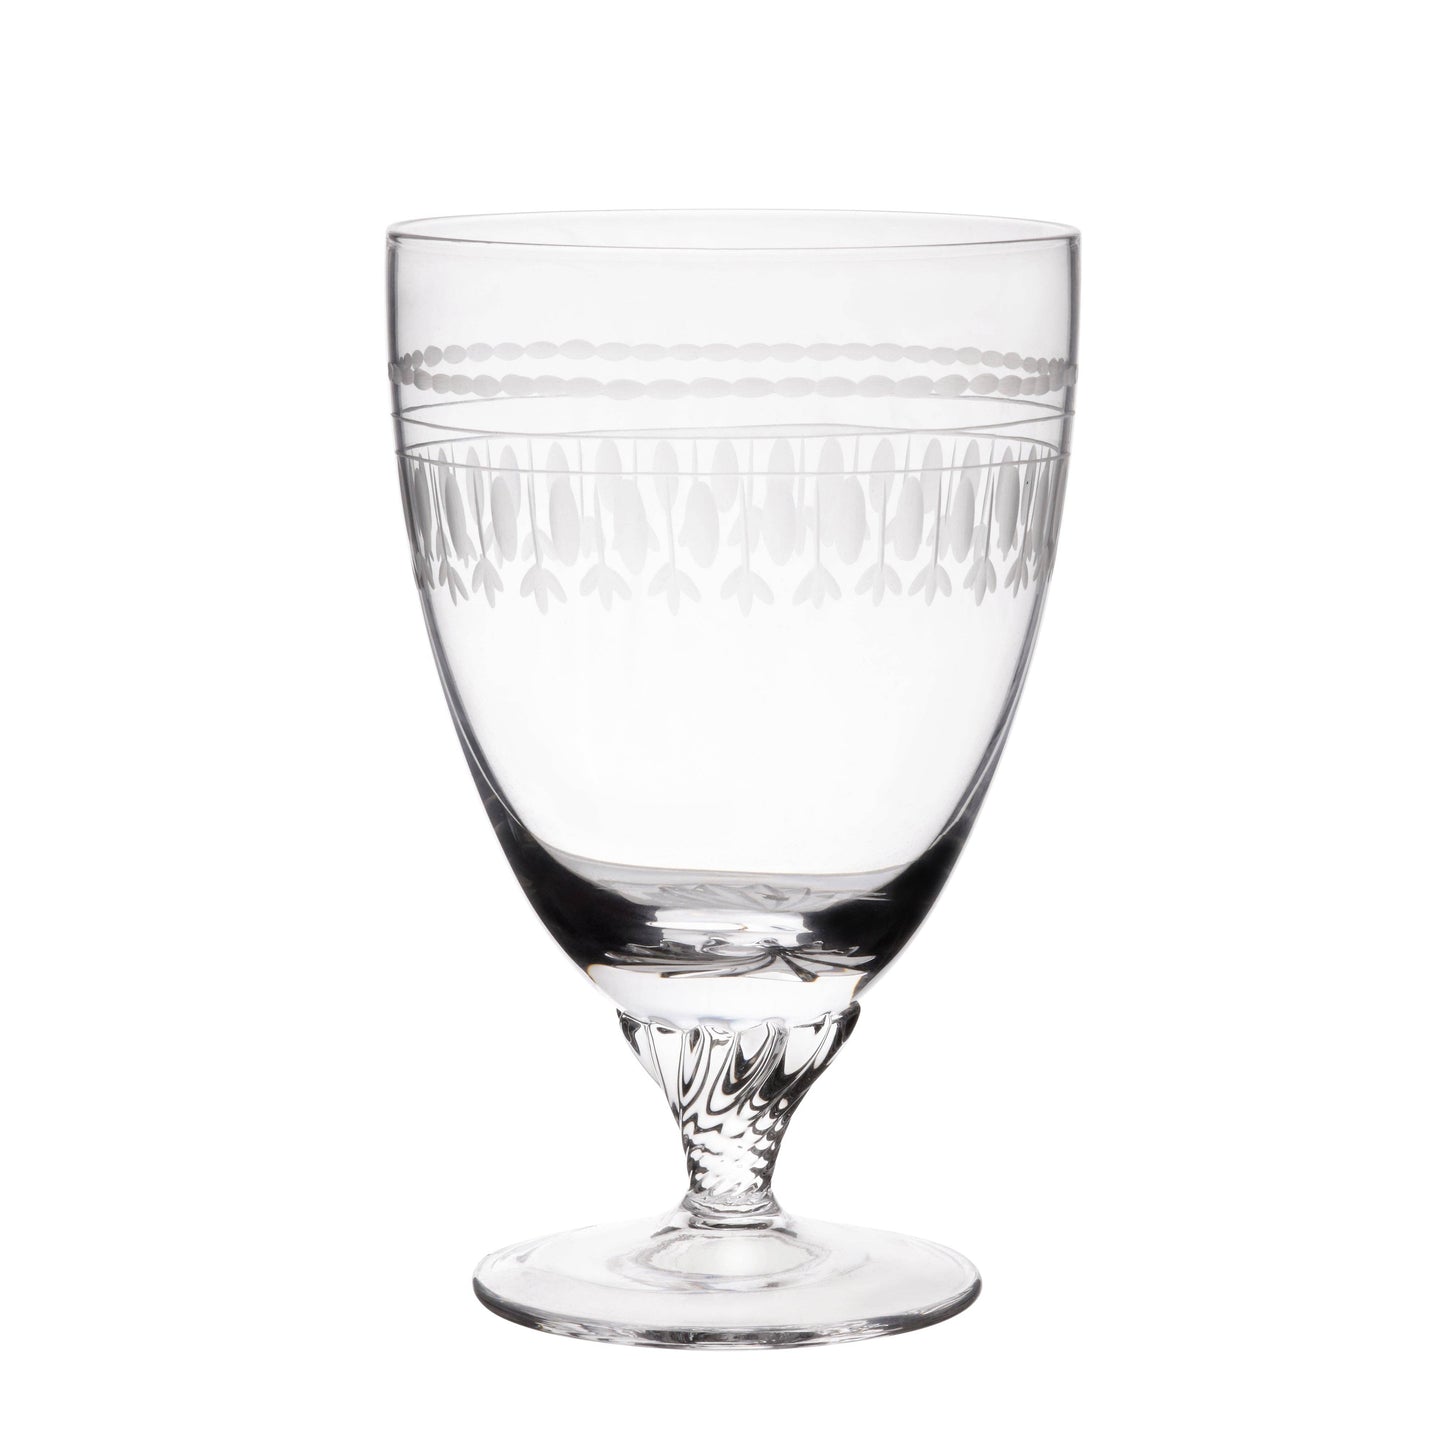 The Vintage List - A Set Of Six Crystal Bistro Glasses with Ovals Design